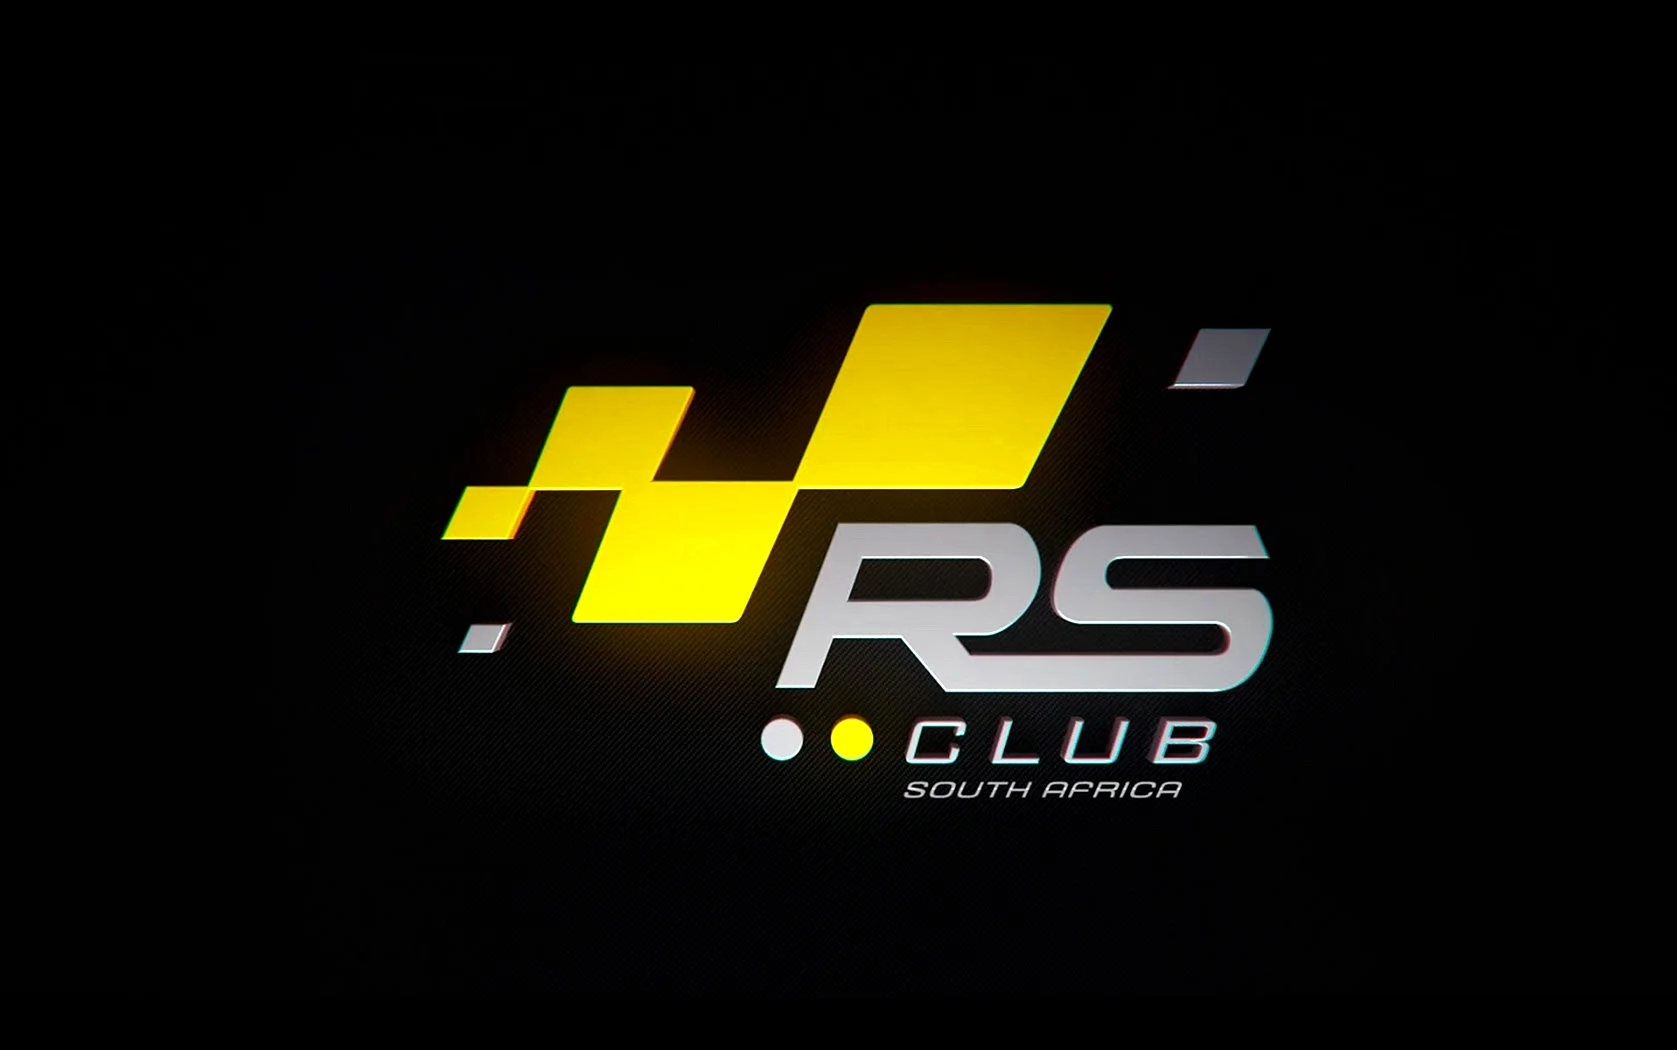 Renault Sport Logo Wallpaper